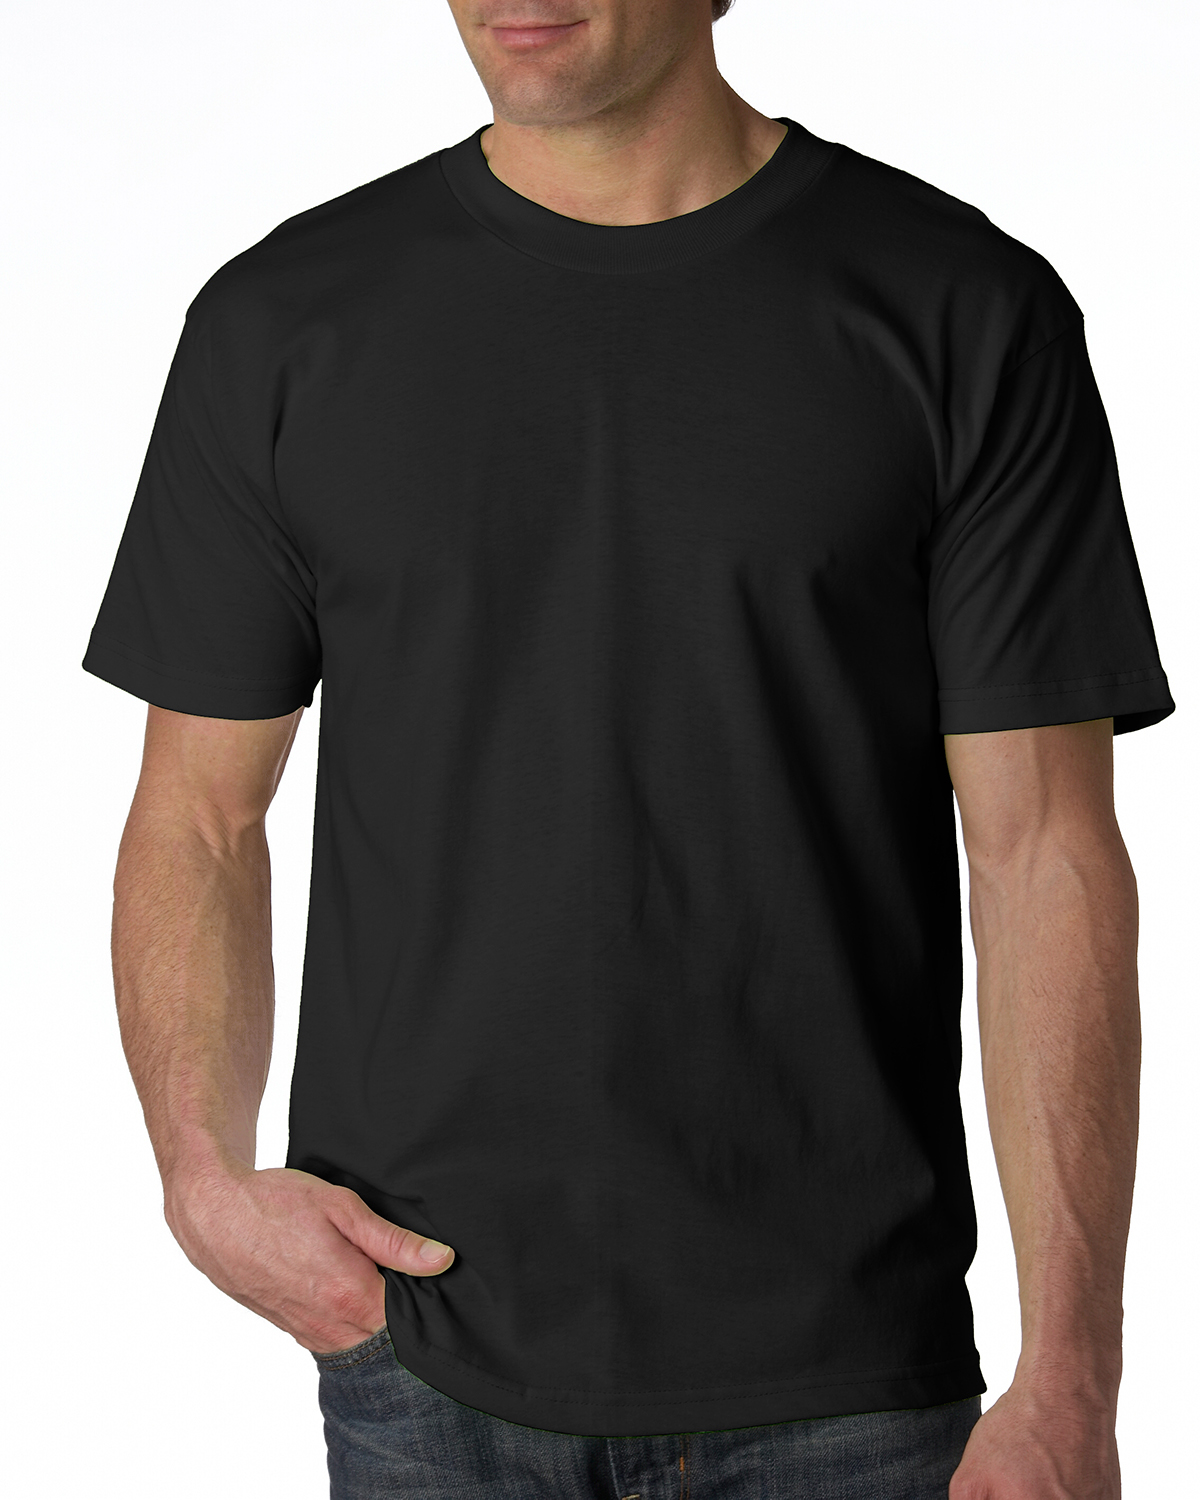 Bayside BA5100 - 6.1 oz. Basic T-Shirt